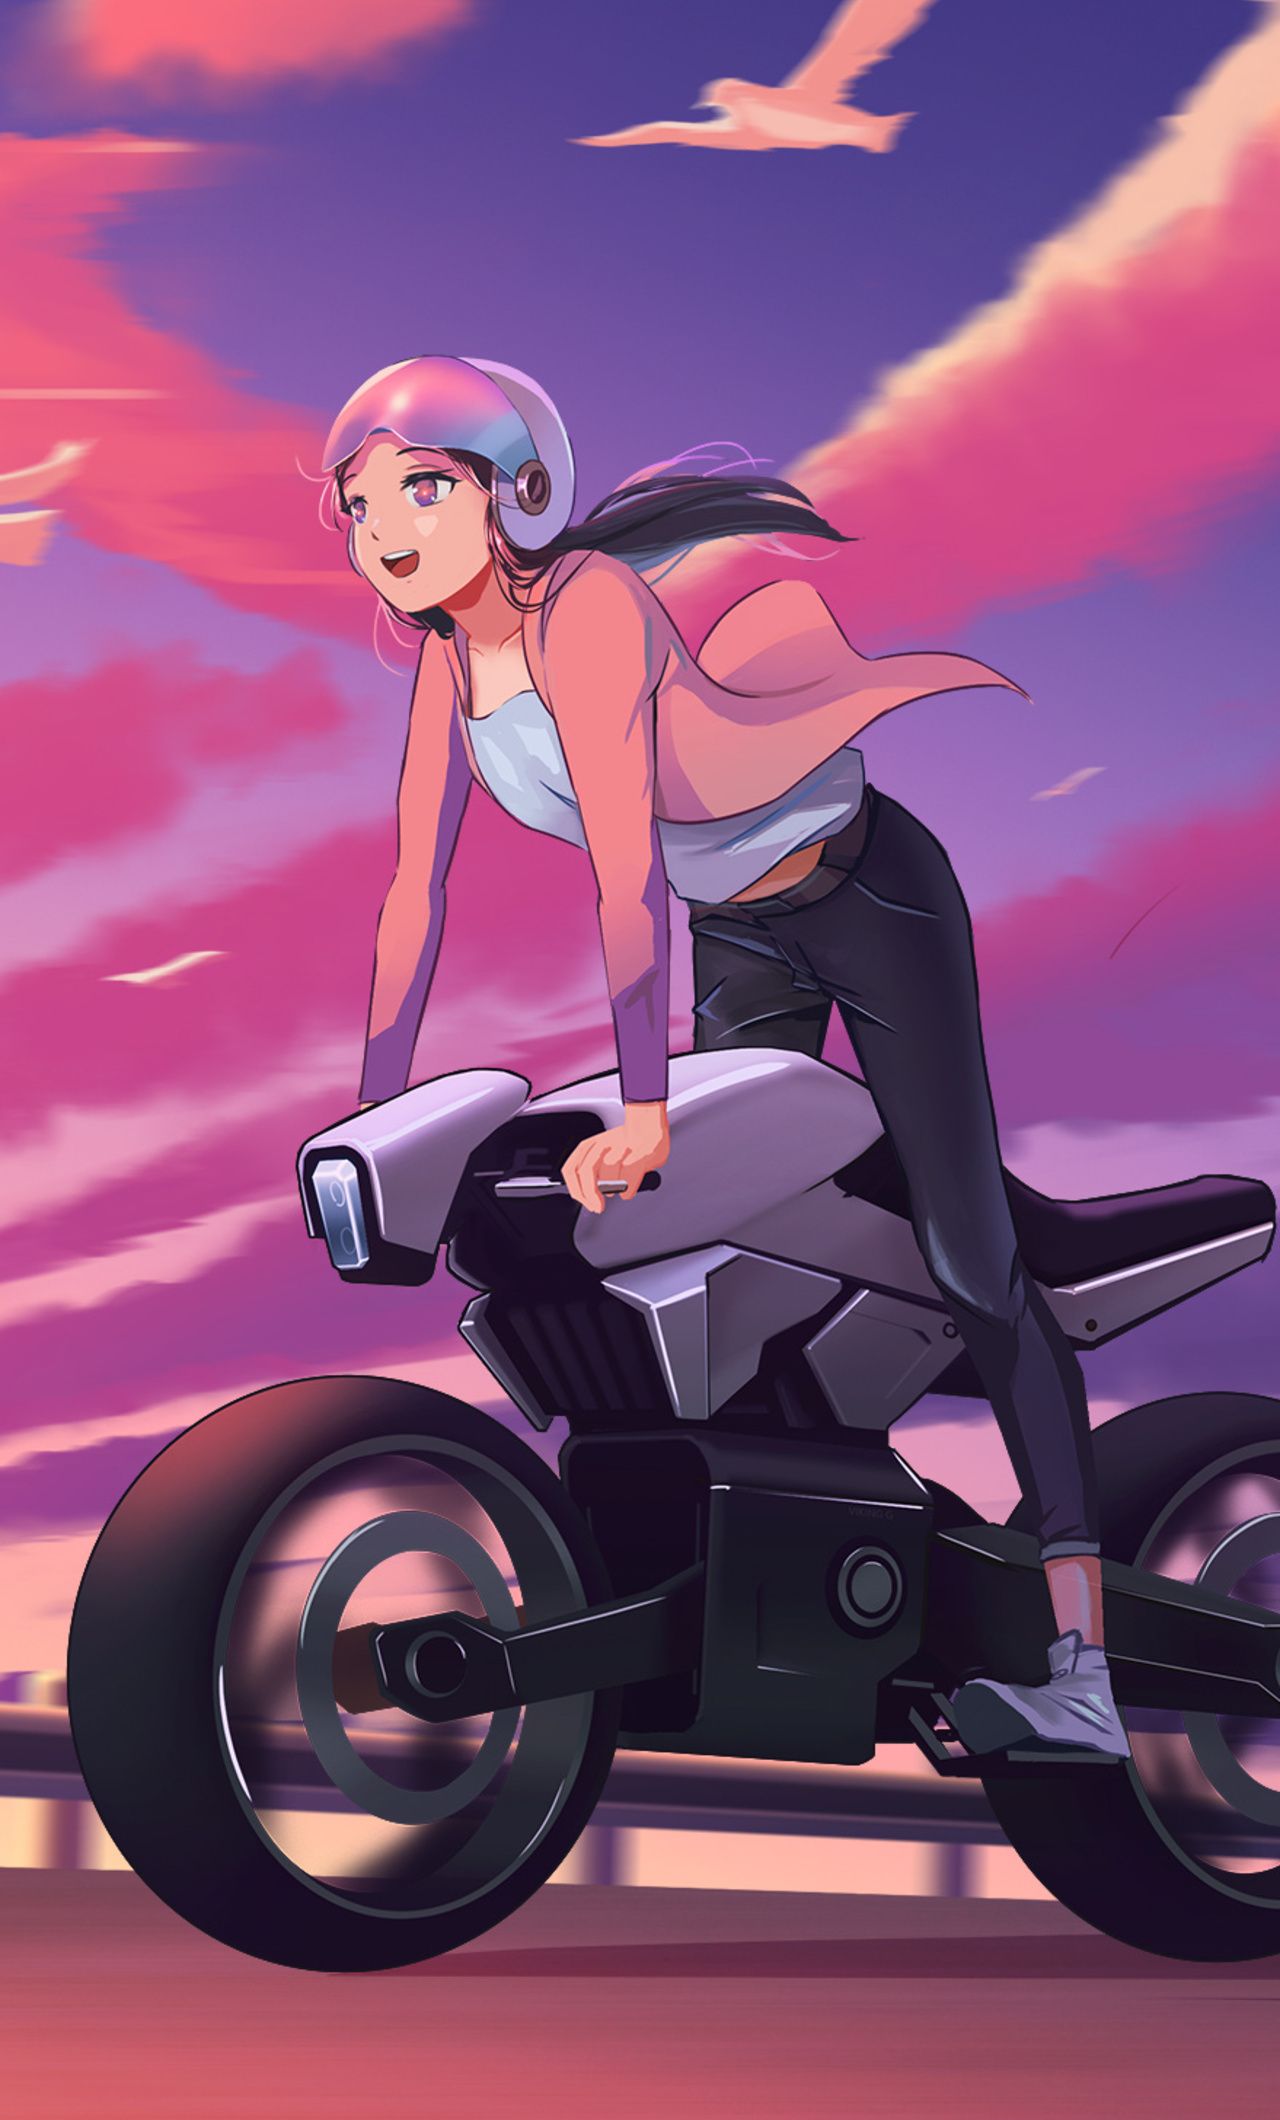 Anime Biker Girl Art iPhone HD 4k Wallpaper, Image